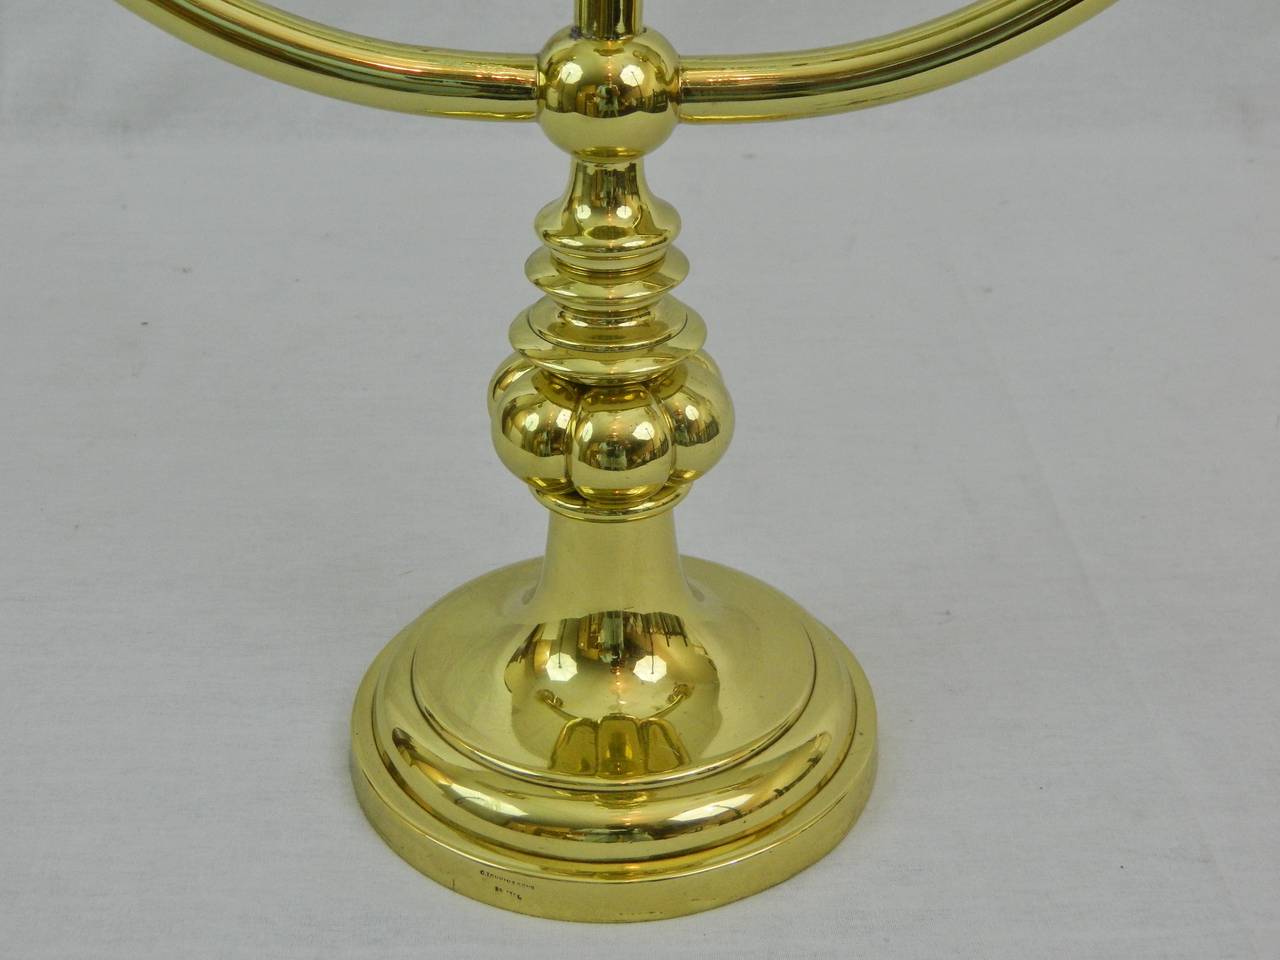 how to polish brass candlesticks